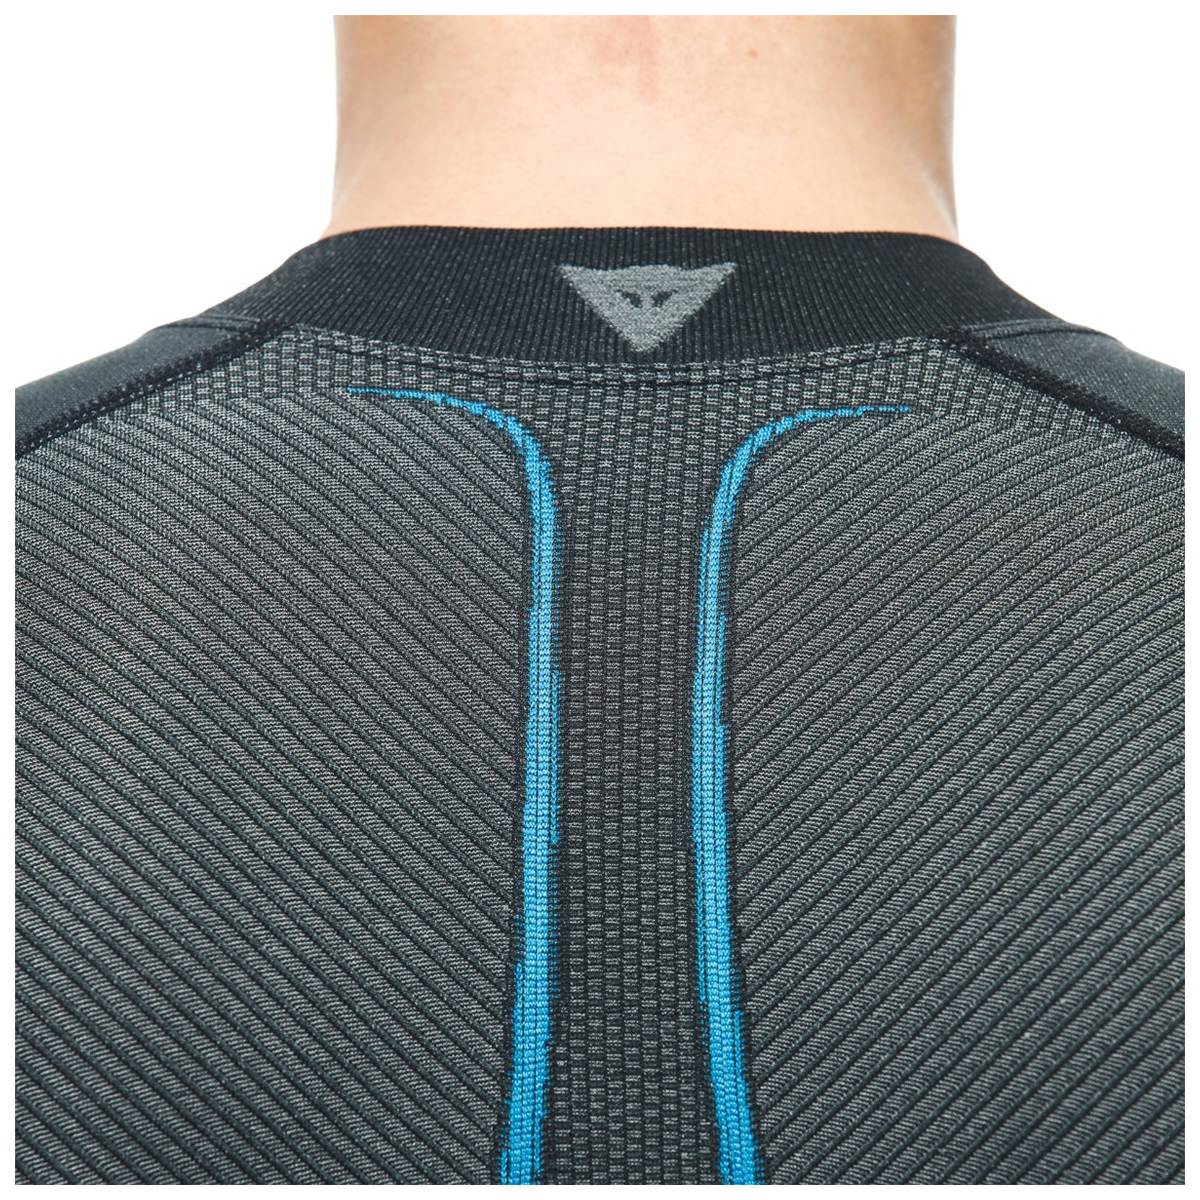 Dainese Funktionskombi Dry Suit, schwarz-blau